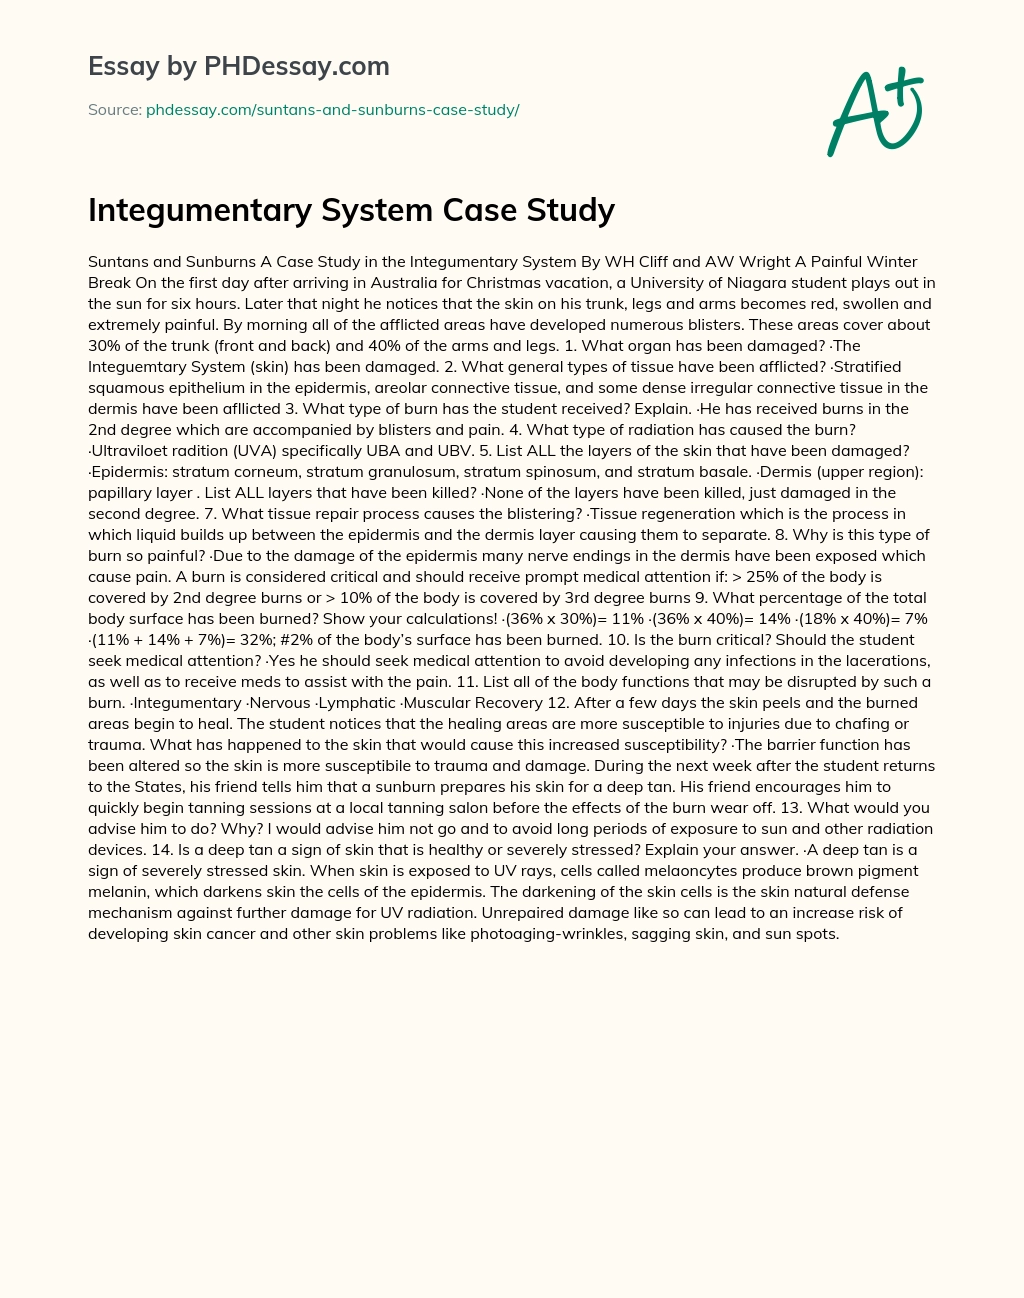 Integumentary System Case Study essay